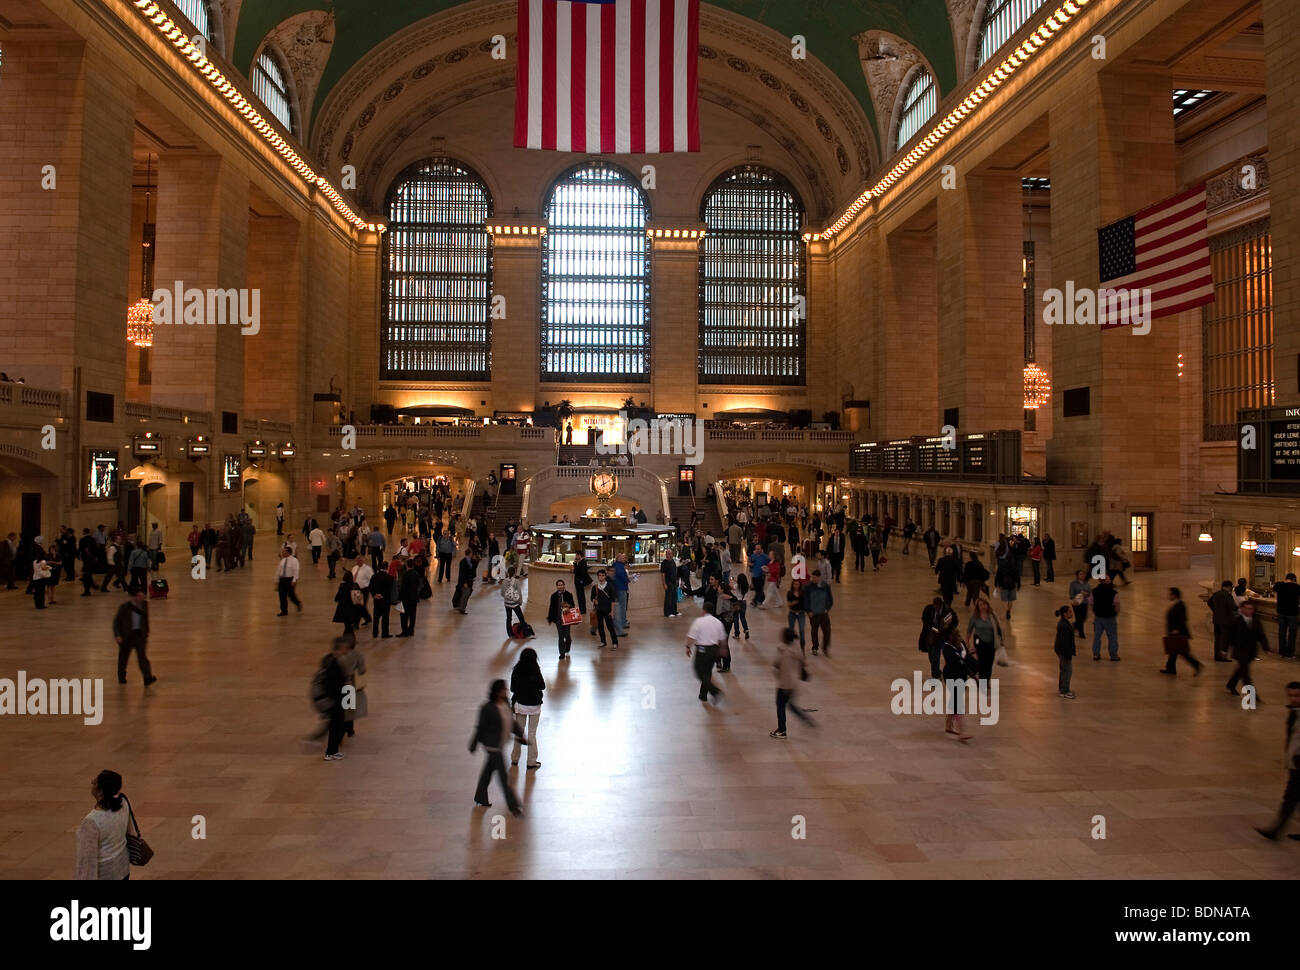 Große Halle der Grand Central Station in Manhattan, New York City, USA, Nordamerika Stockfoto